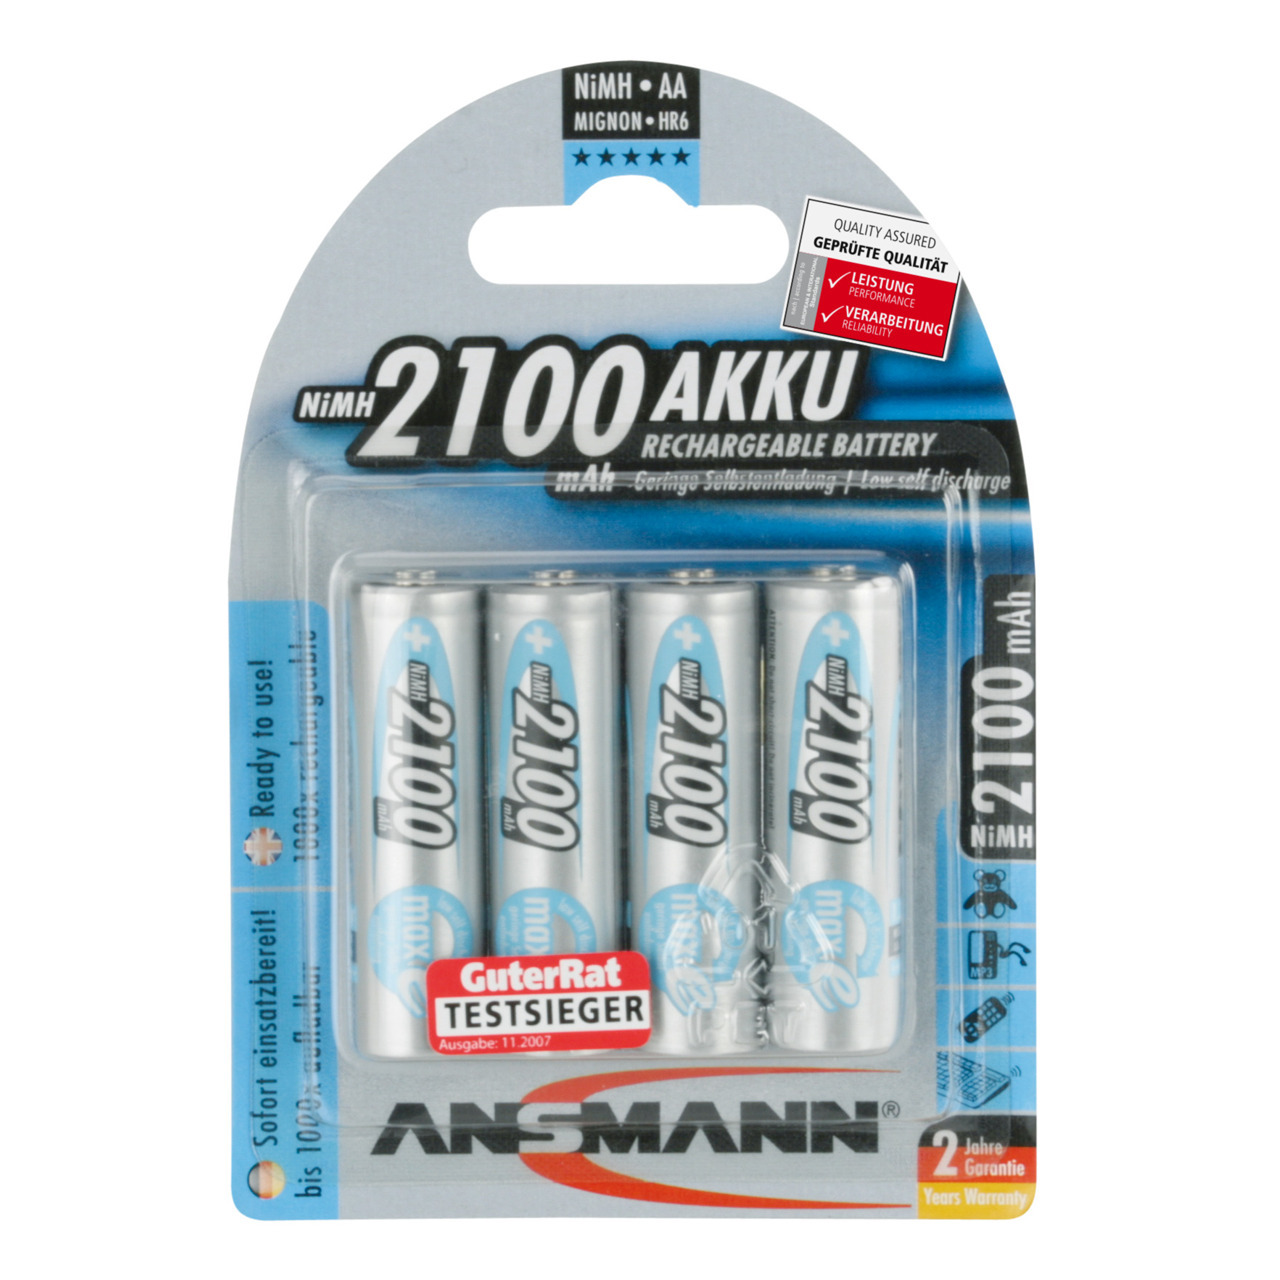 Ansmann NiMH Akku maxE- ready2use Mignon AA 2100mAh- R6 4er Pack